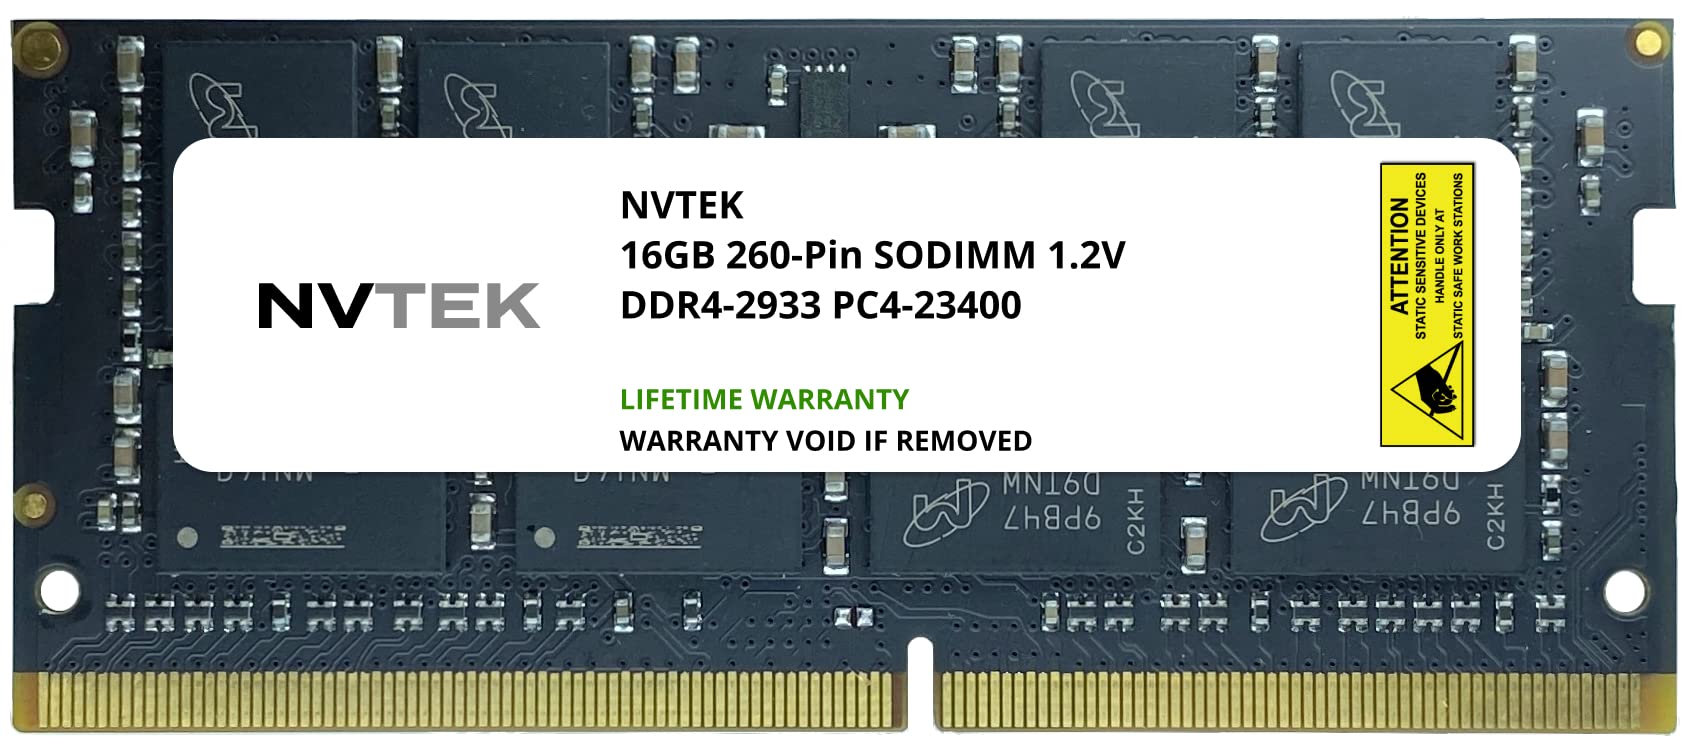 NVTEK 16GB DDR4-2933 PC4-23400 SODIMM ノートパソコン RAM メモリ アップグレード並行輸入品